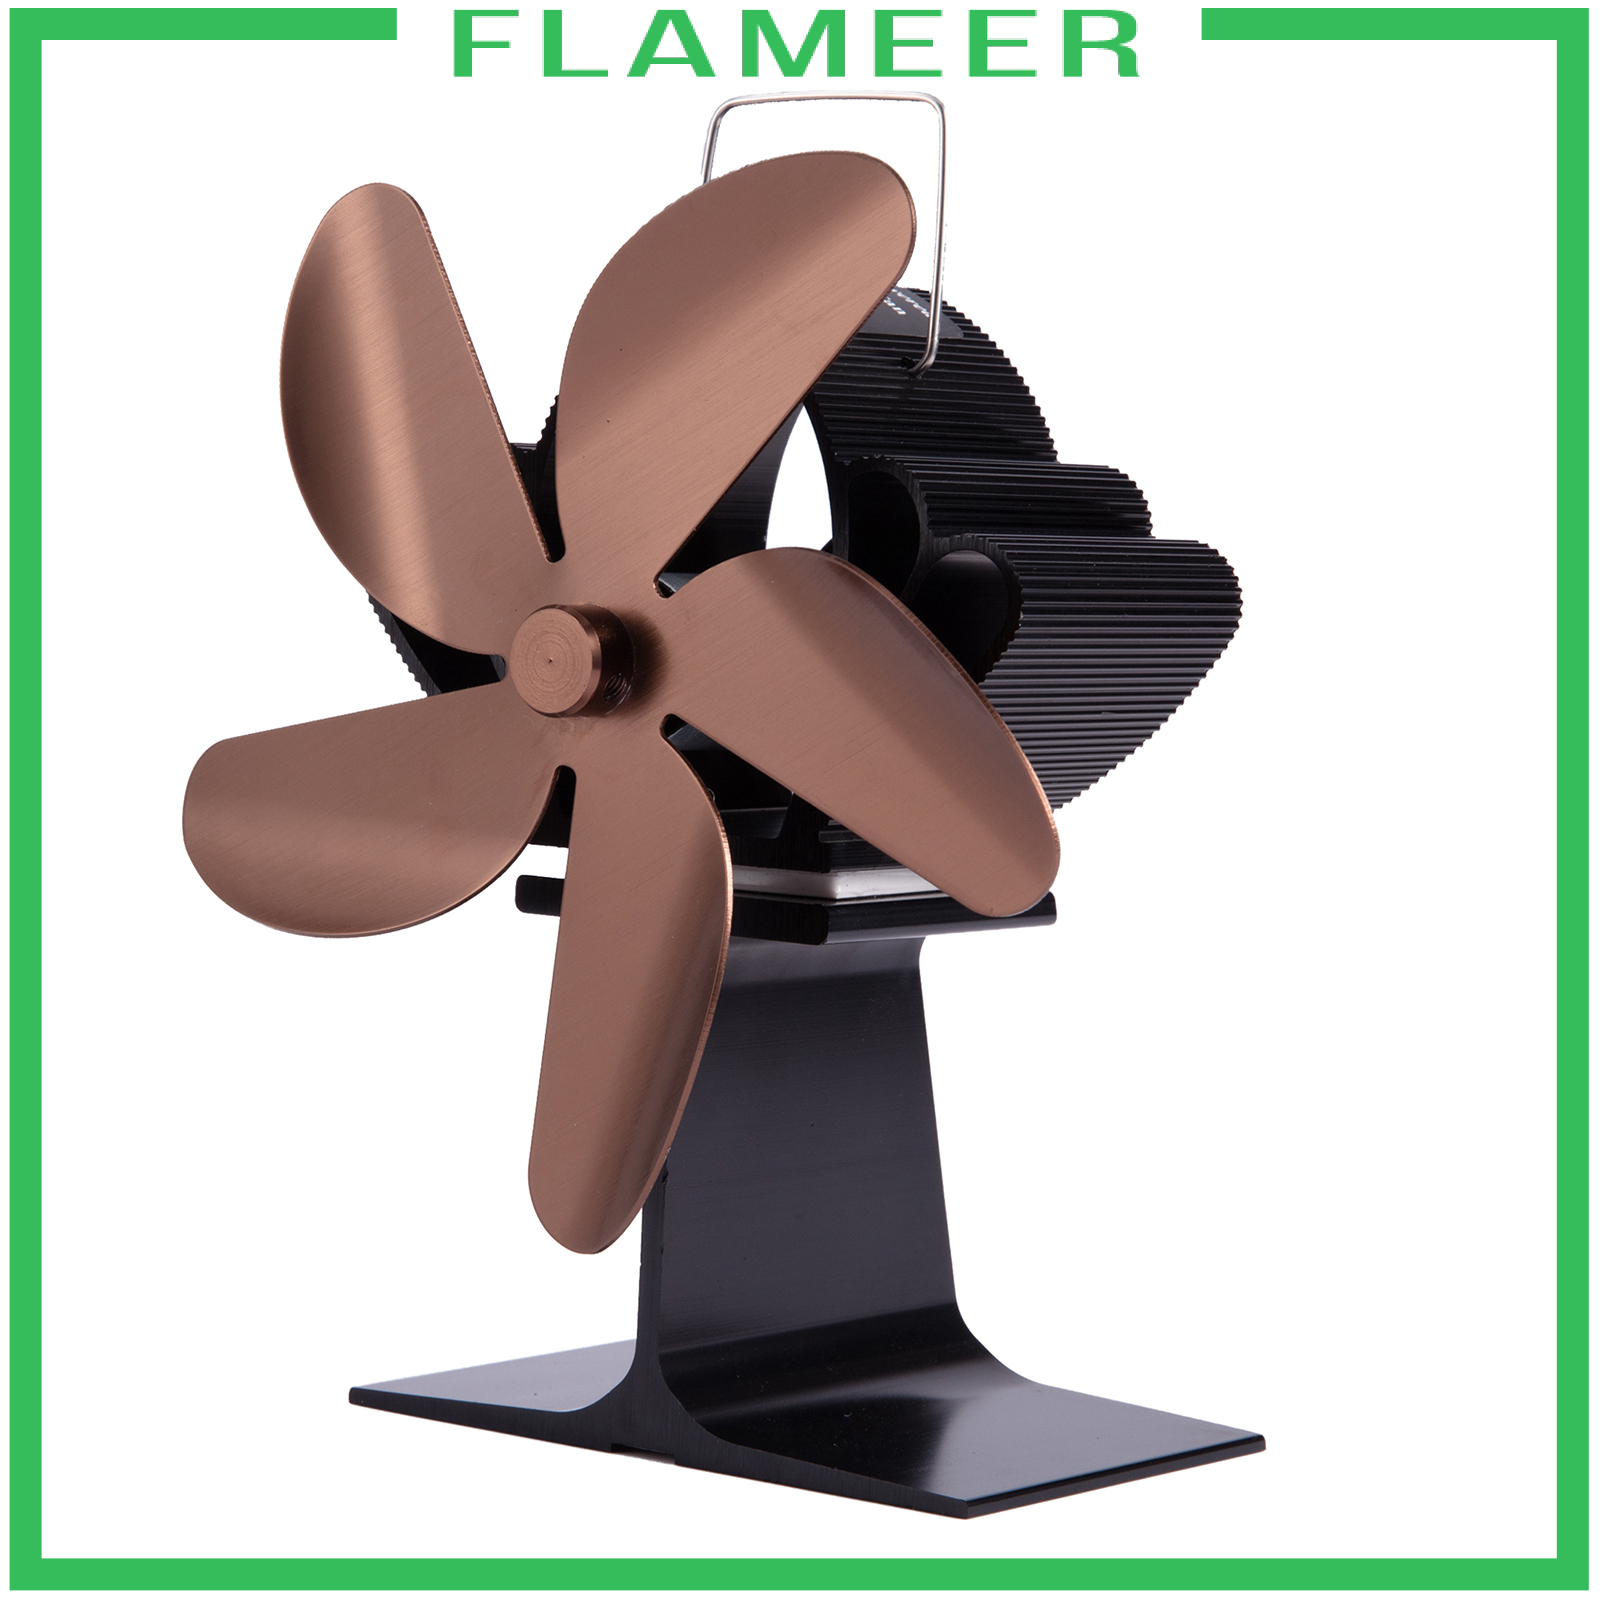 [FLAMEER]Wood Stove Fan Heat Powered Fireplace Log Burner Fireplace 5 Blades Black